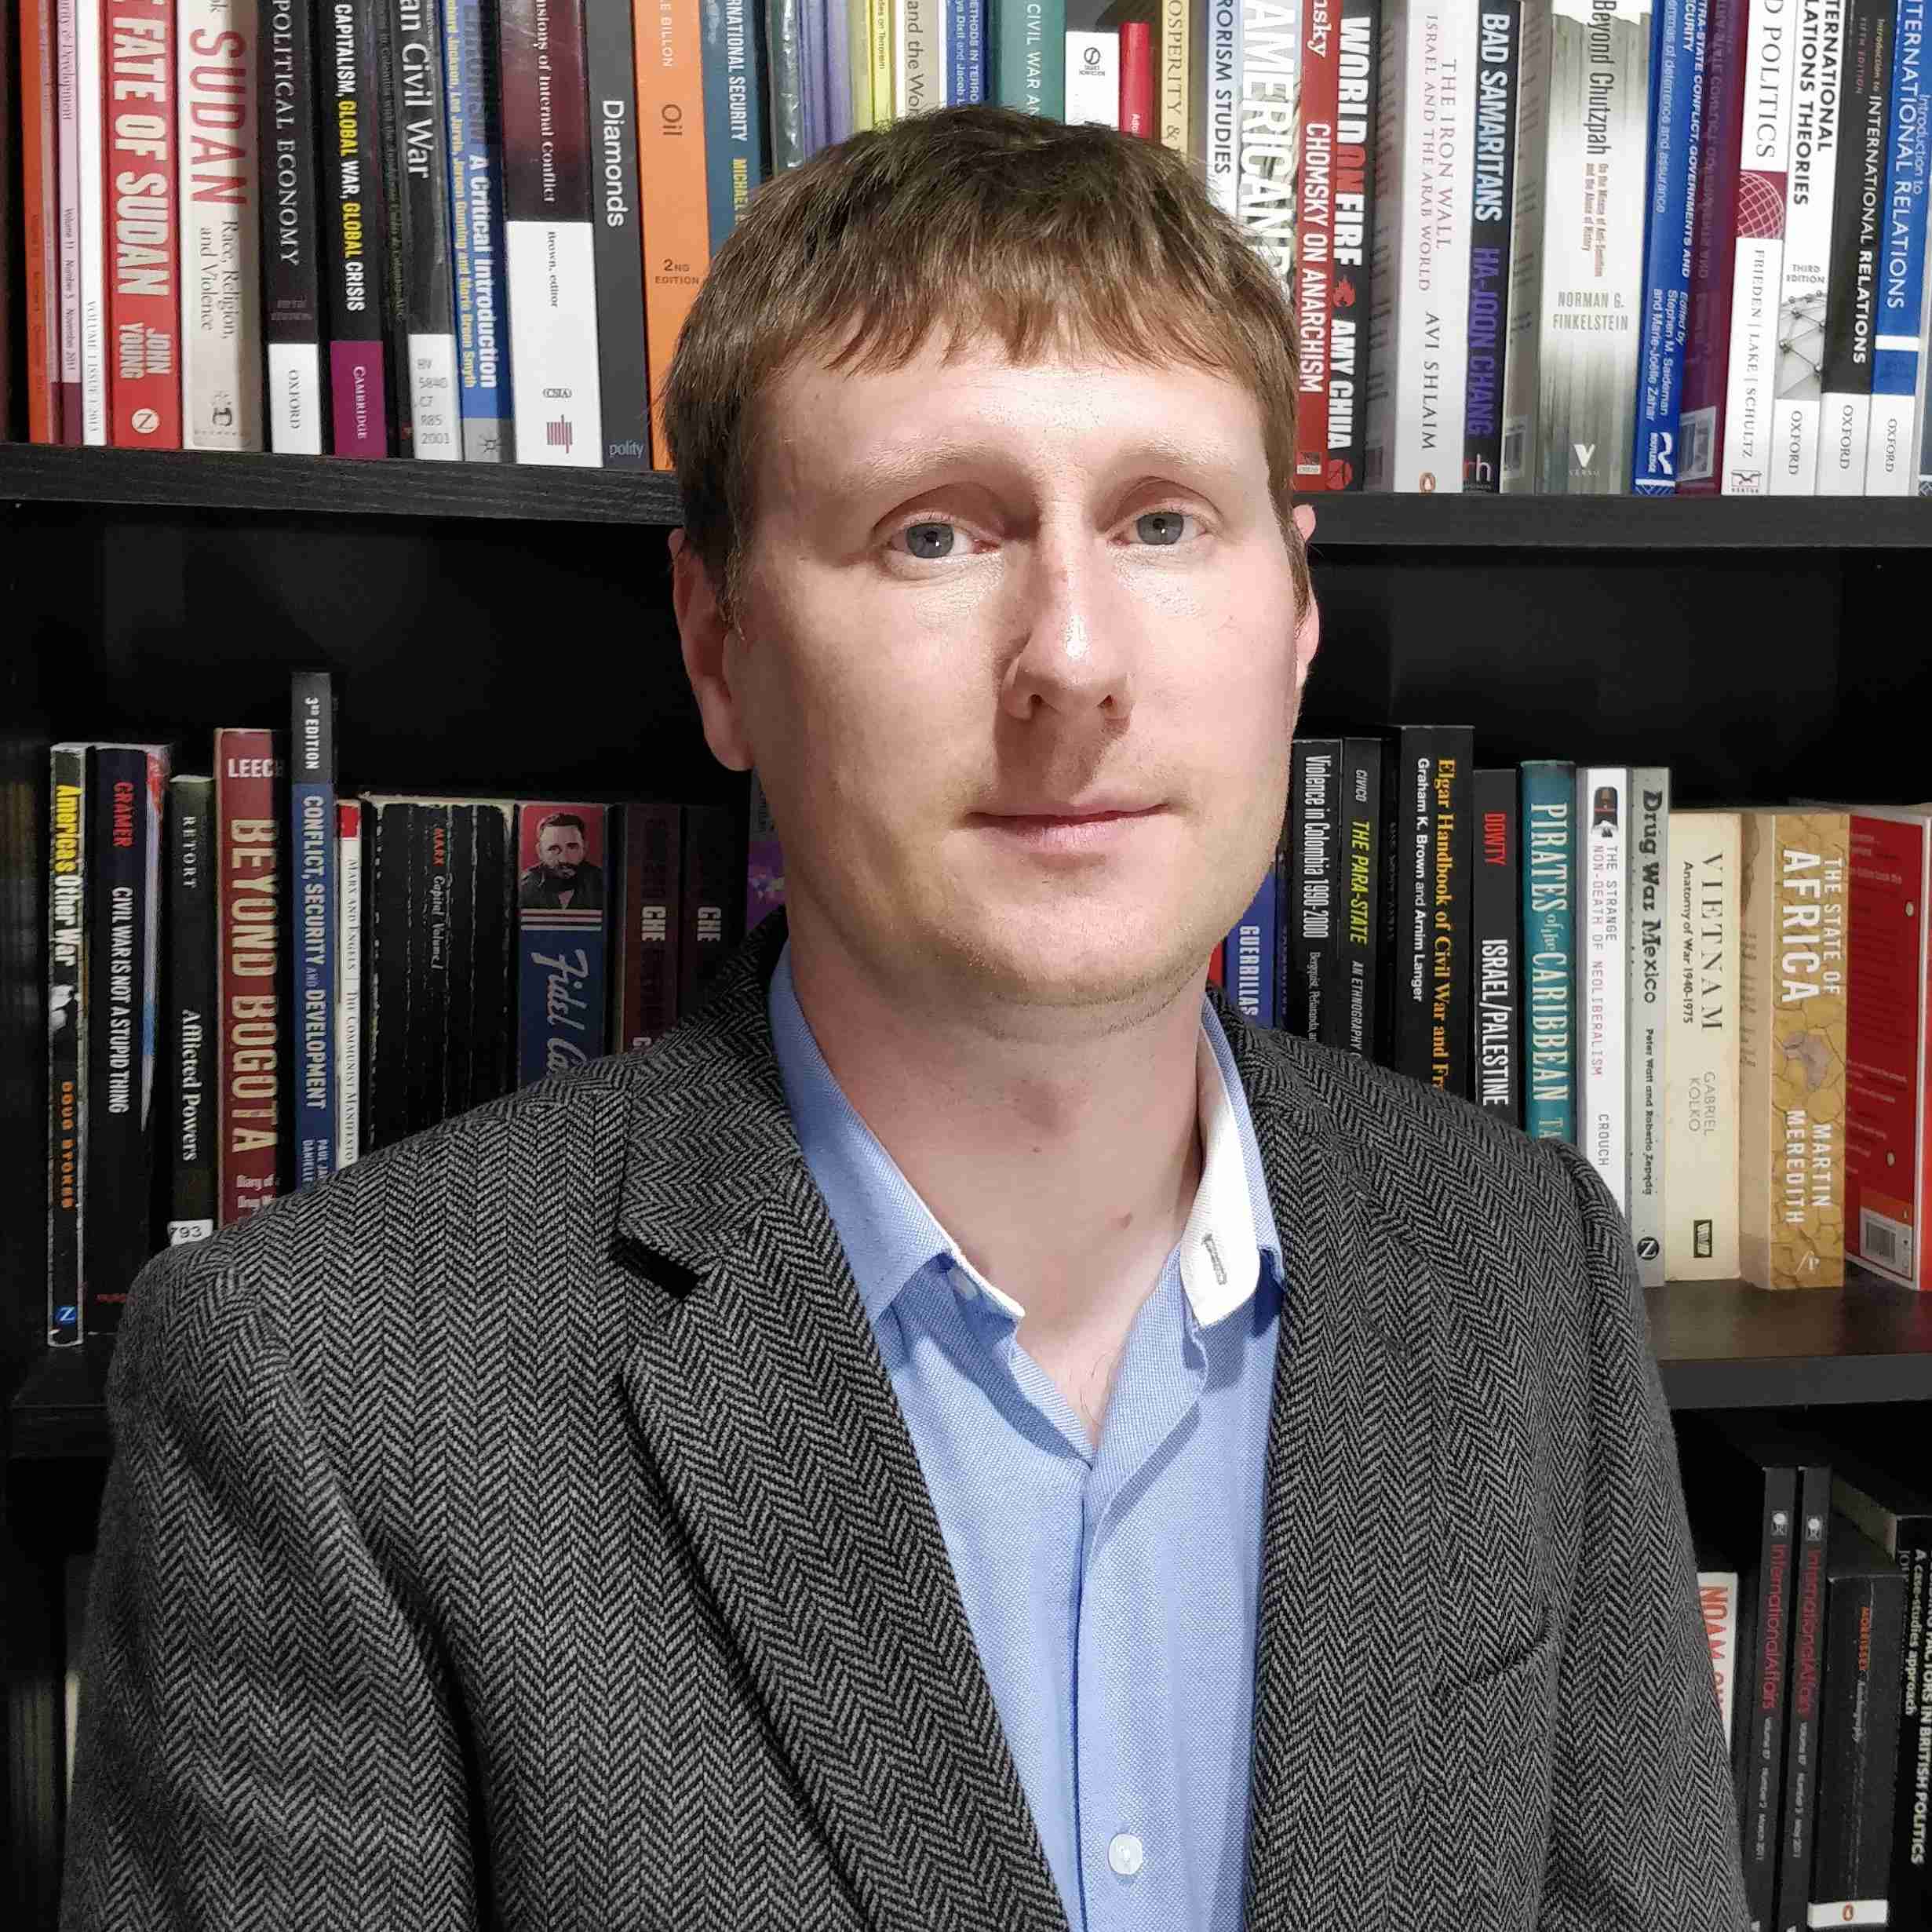 Profile image of Dr David Maher